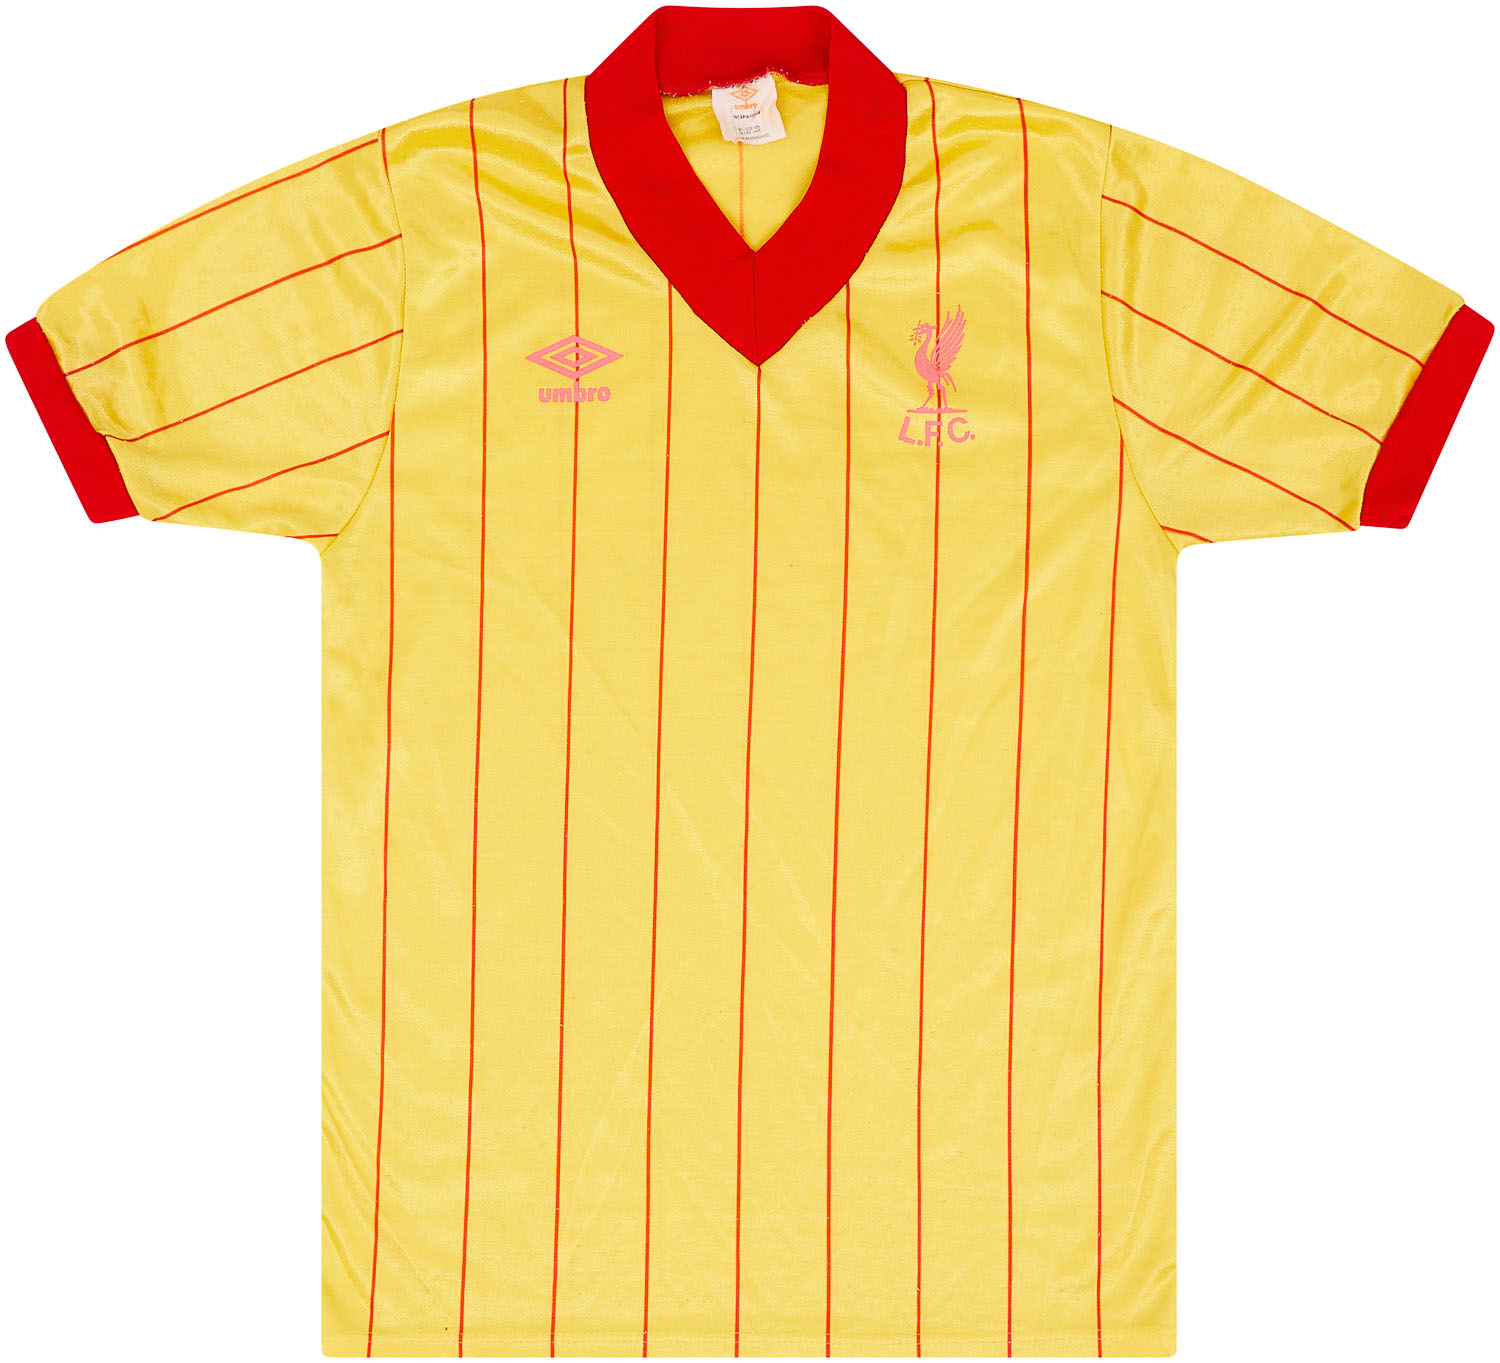 1981-84 Liverpool Away Shirt - 8/10 - ()